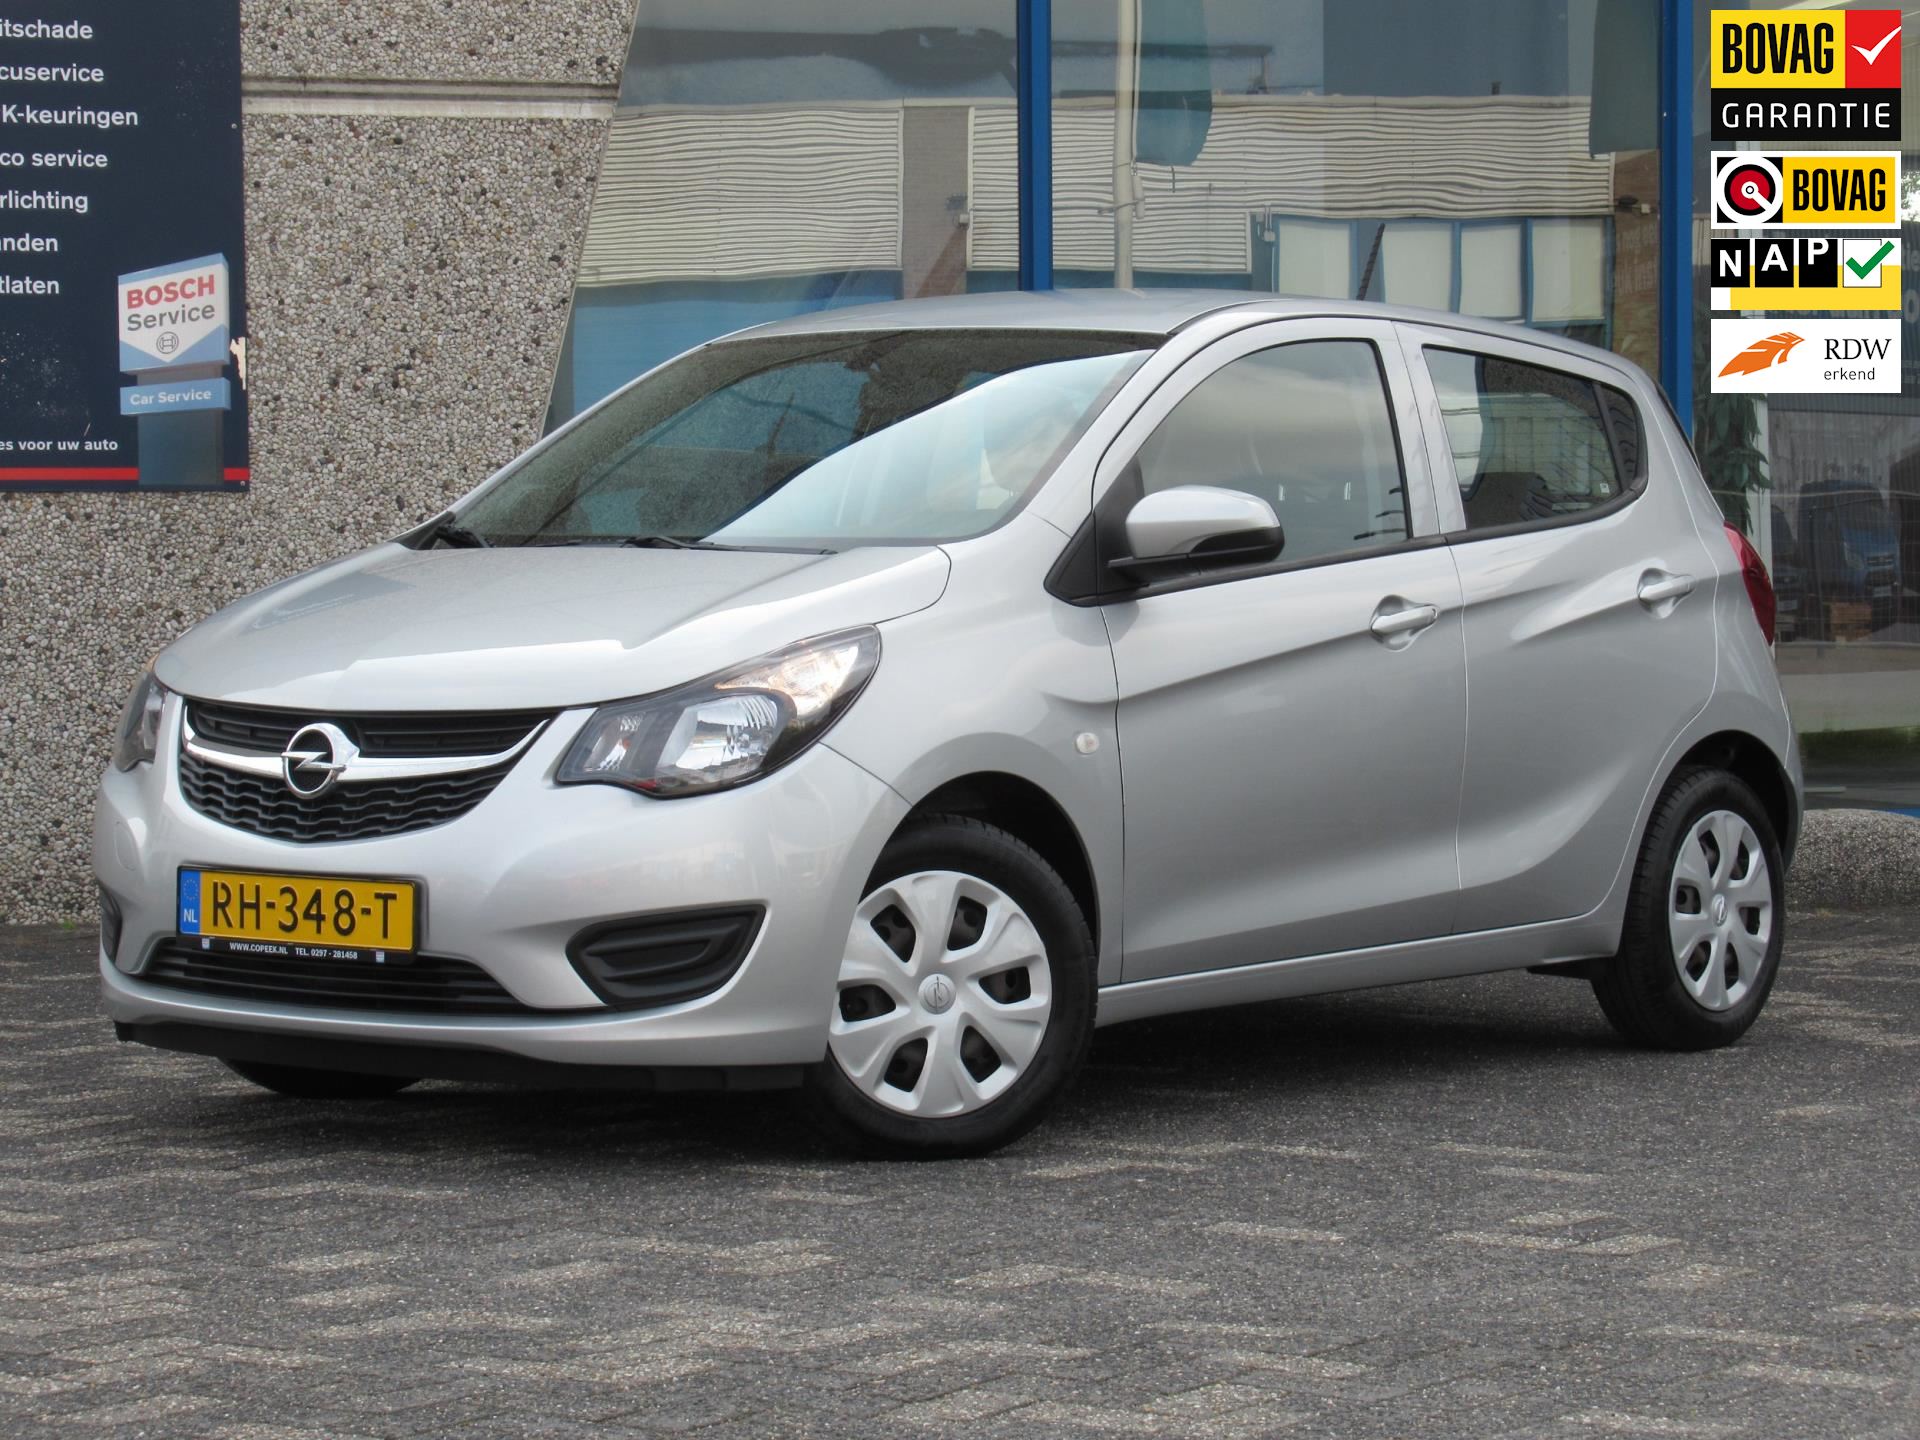 Opel KARL occasion - Autobedrijf Peek